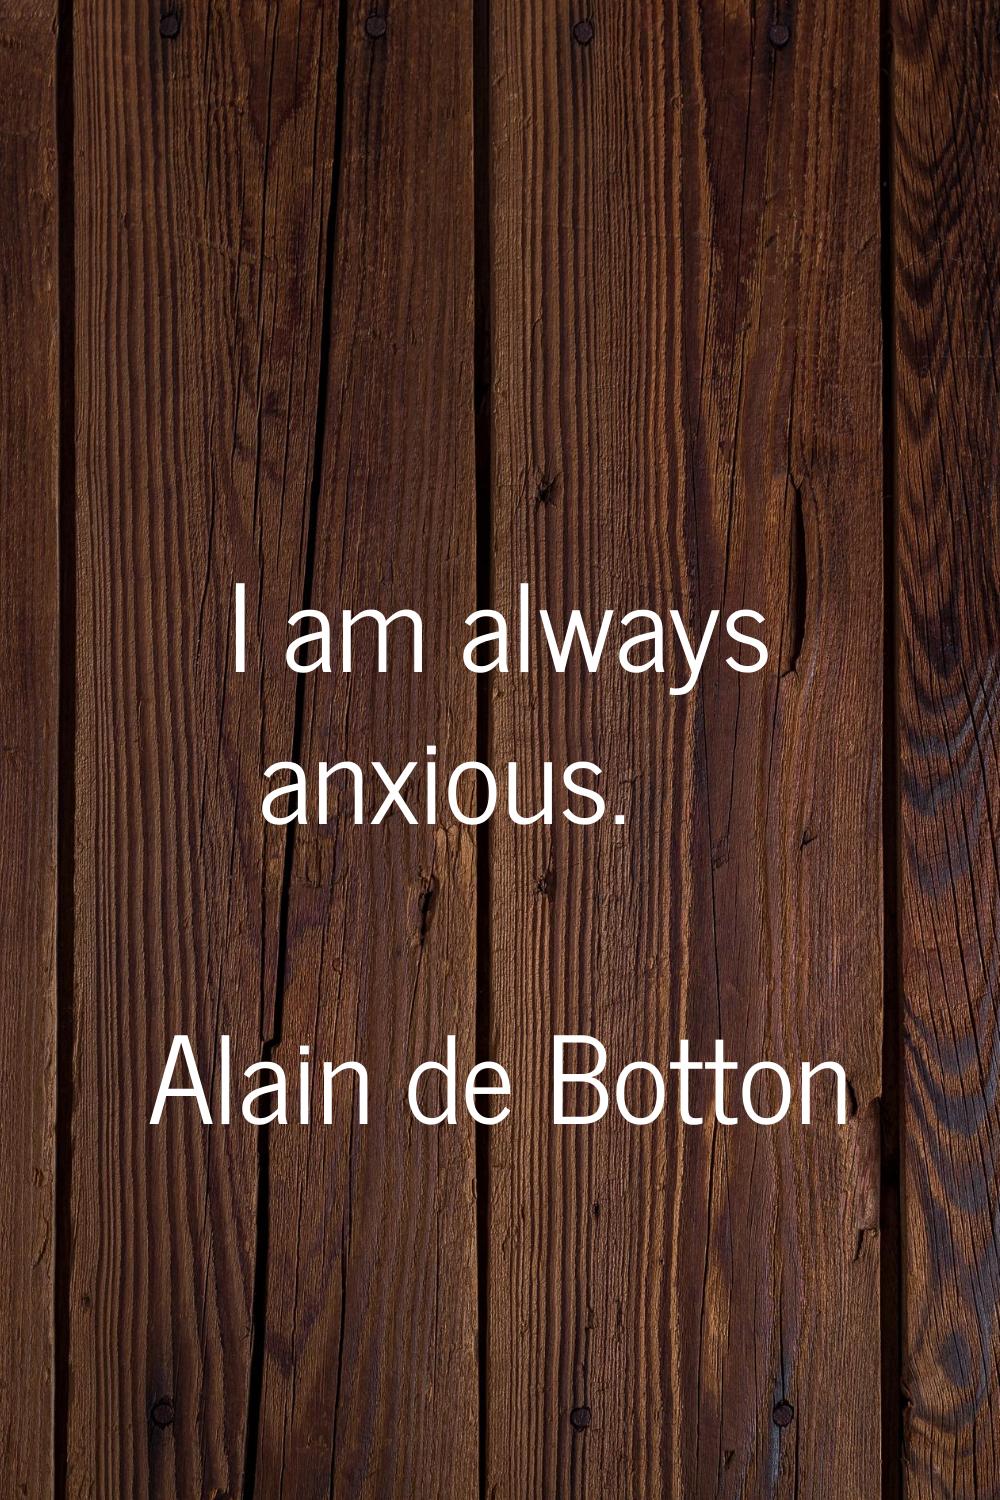 I am always anxious.